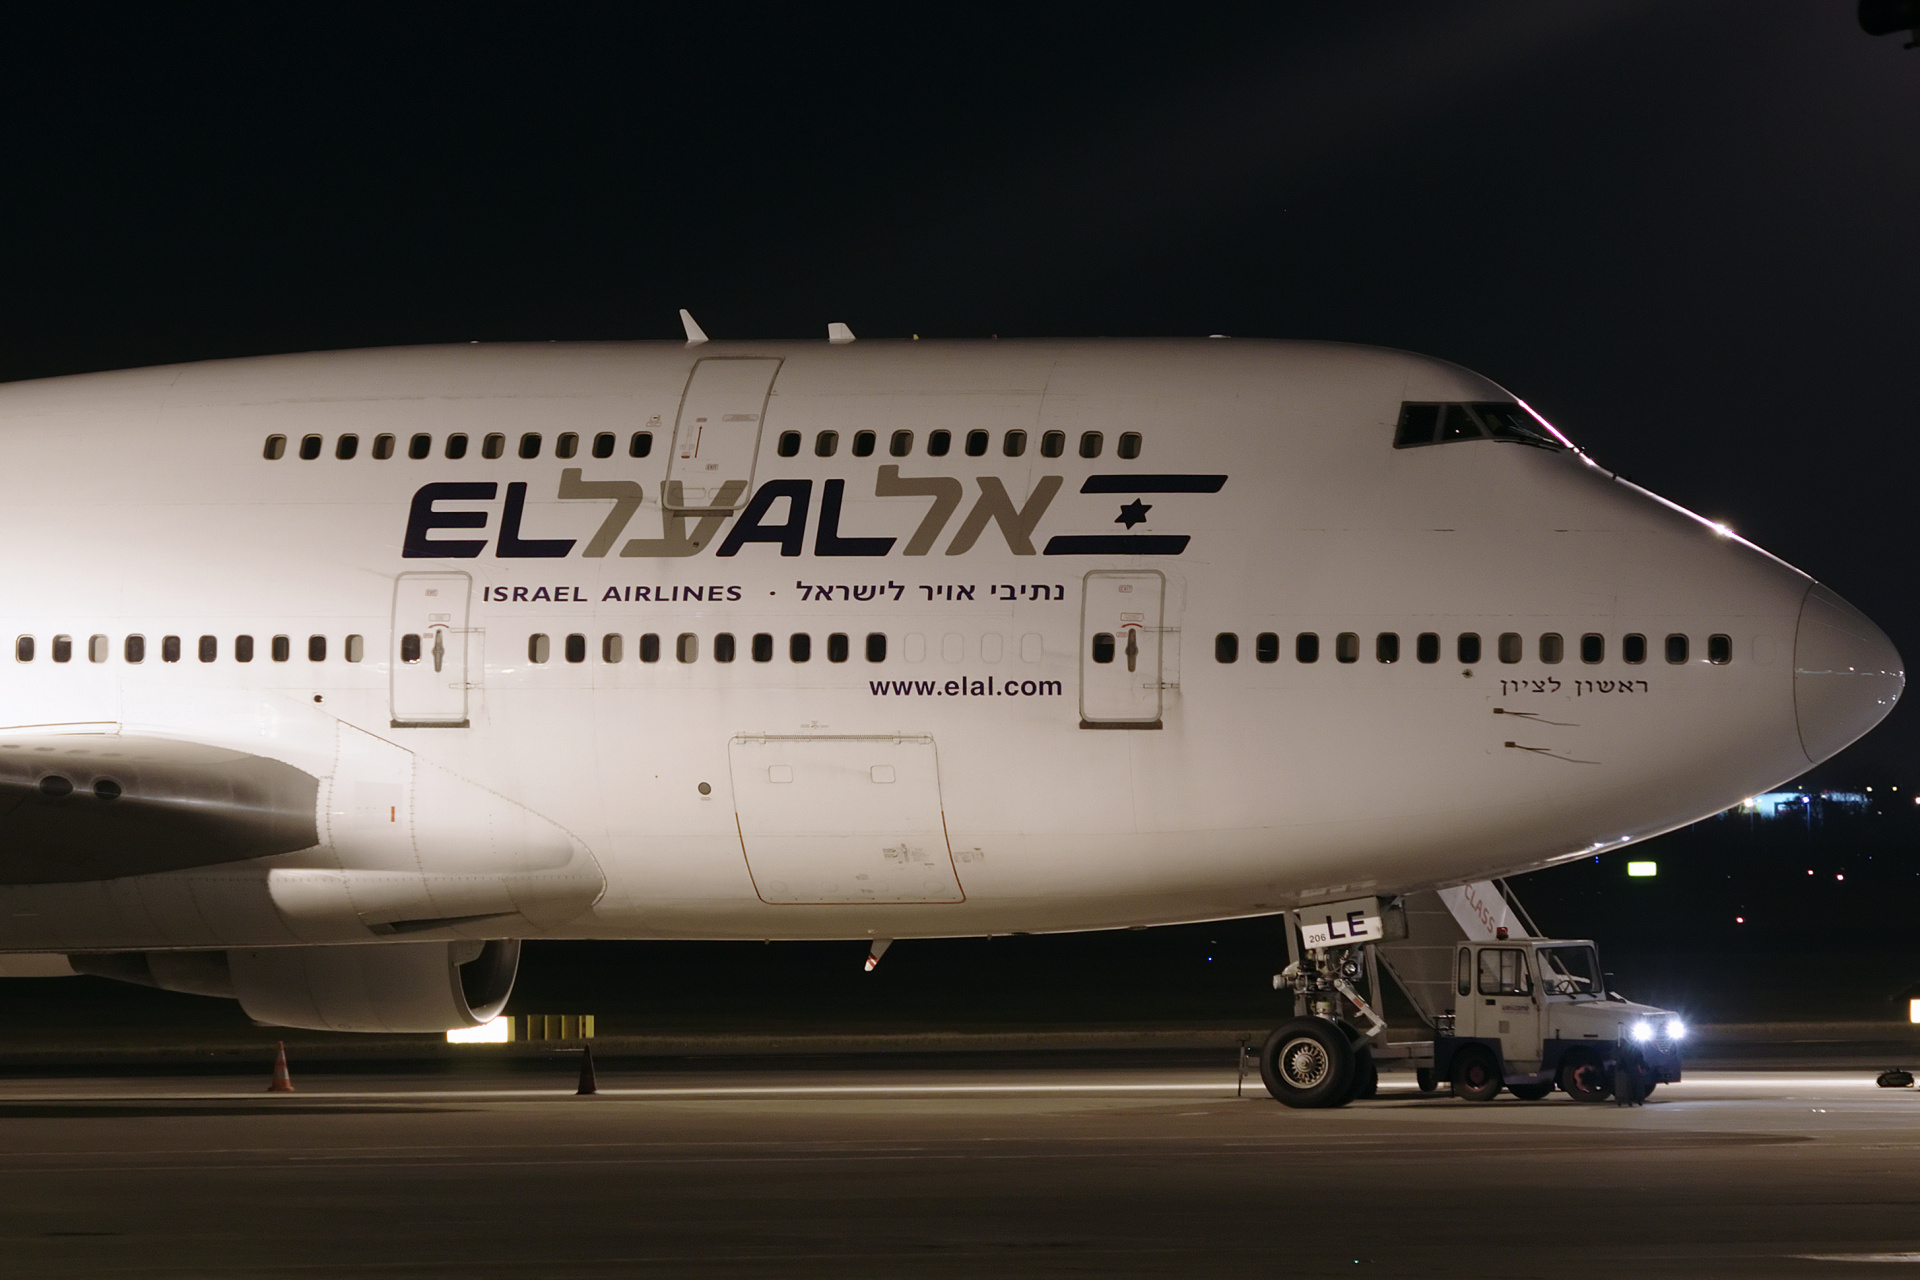 4X-ELE (Aircraft » EPWA Spotting » Boeing 747-400 » El Al Israel Airlines)